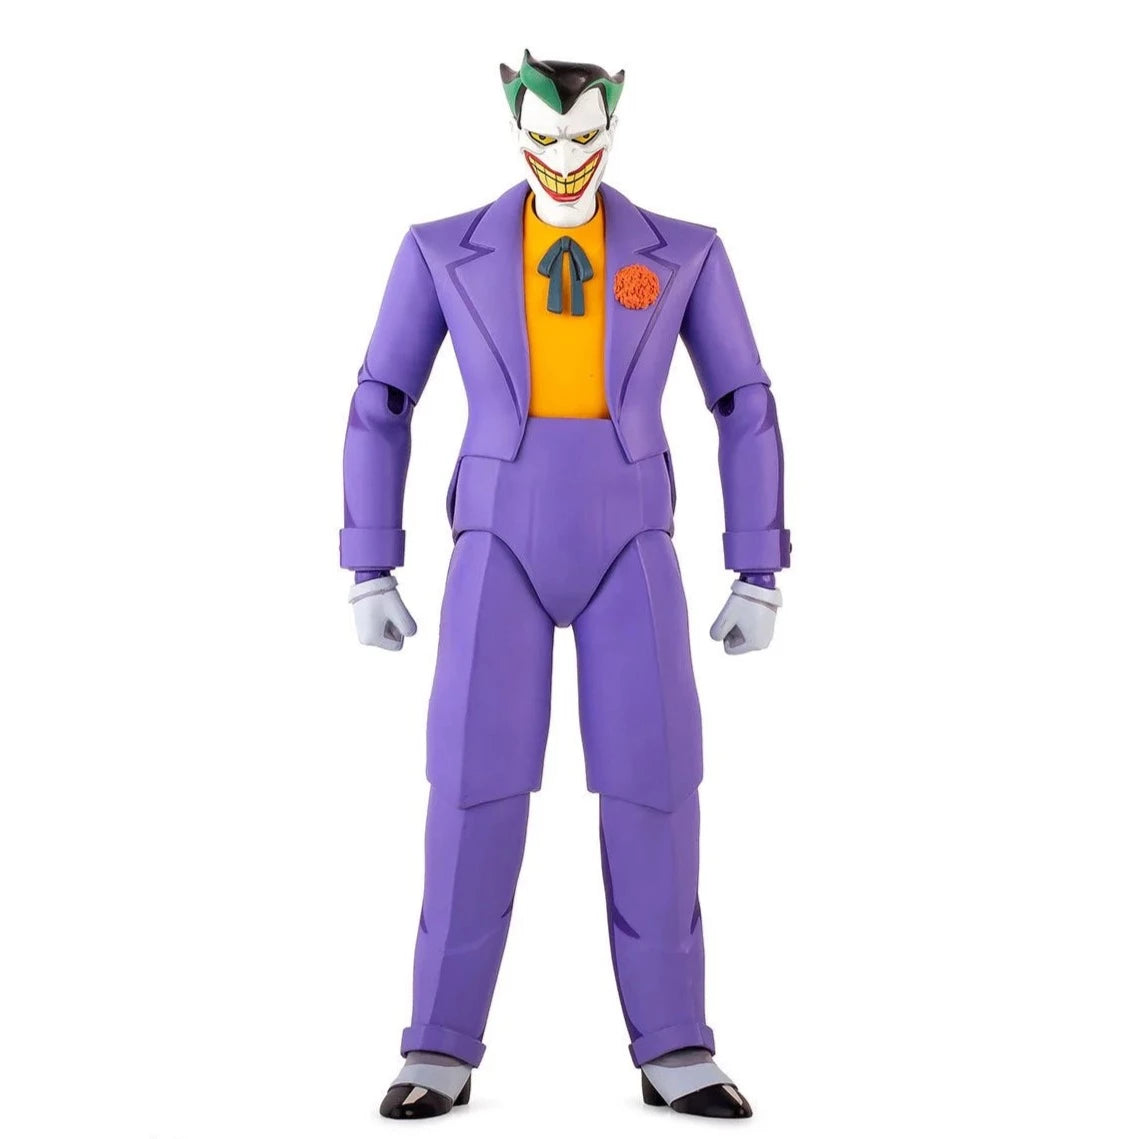 Batman: The Animated Series Joker 1:6 Scale Action Figure by Mondo